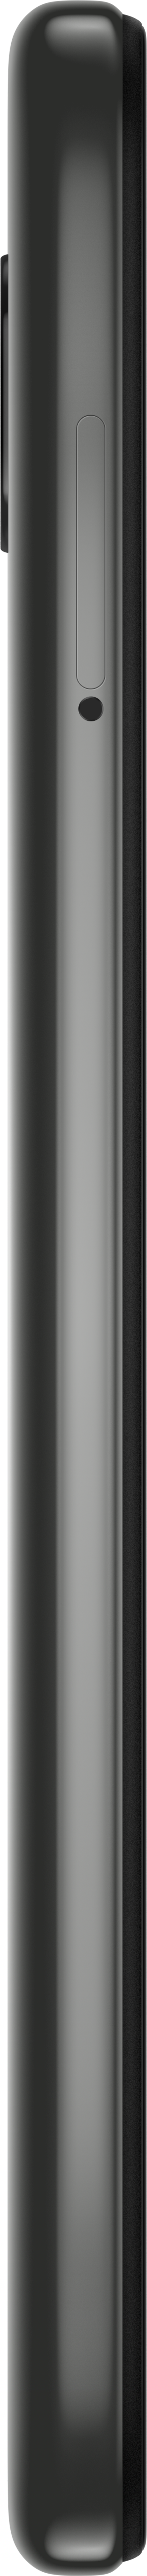 XIAOMI REDMI 8 64GB+4GB ONYX Onyx Dual BLACK SIM Black GB 64